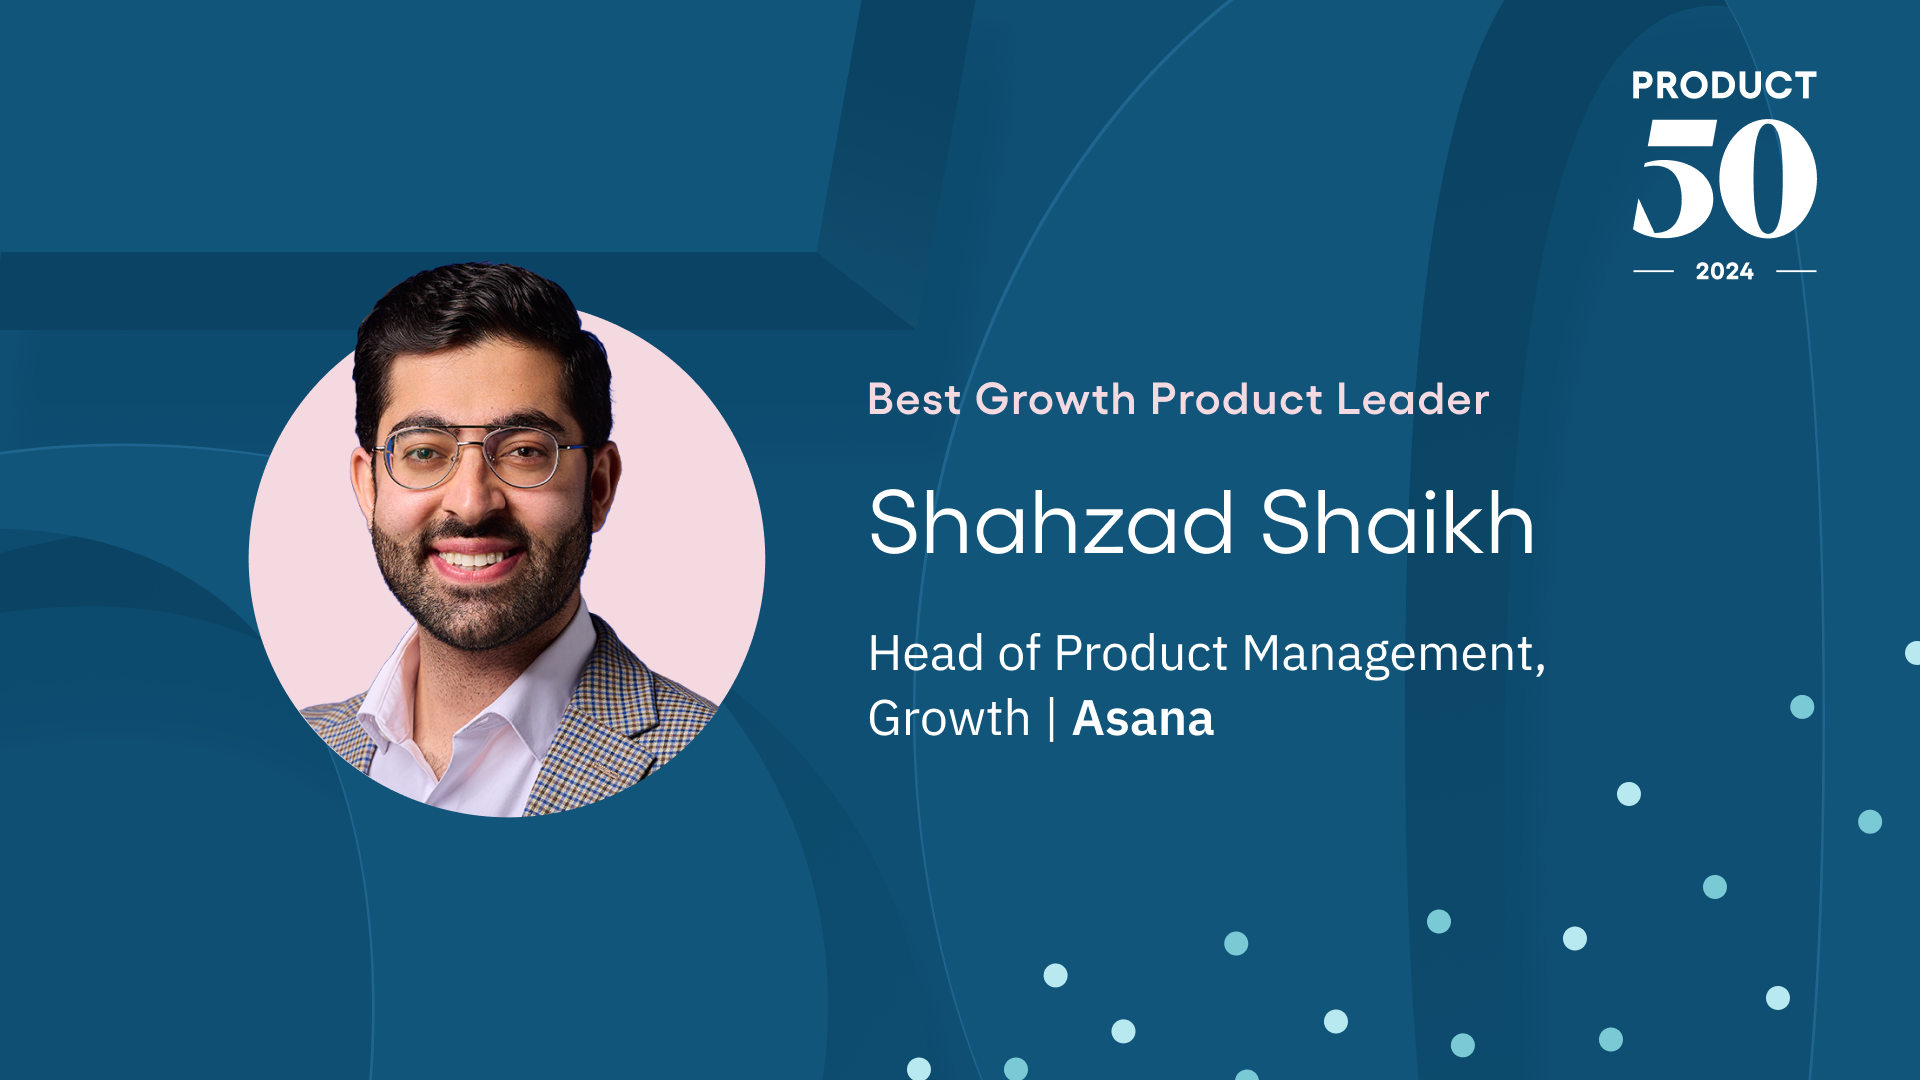 Product 50 Winner: Shahzad Shaikh